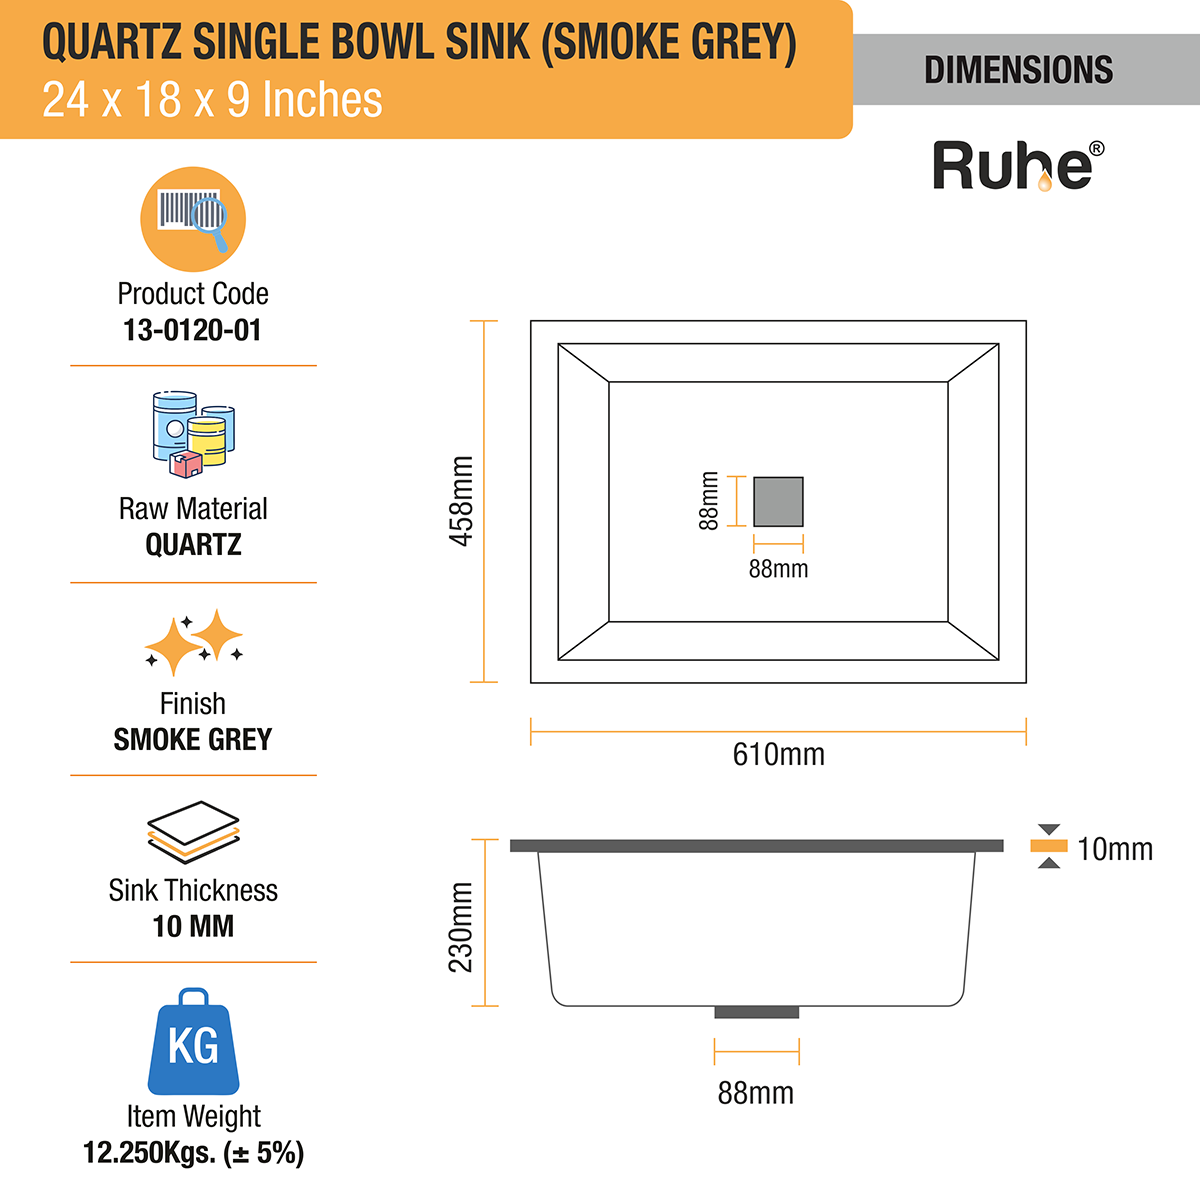 Quartz Single Bowl Smoke Grey Kitchen Sink (24 x 18 x 9 inches) dimensions and size